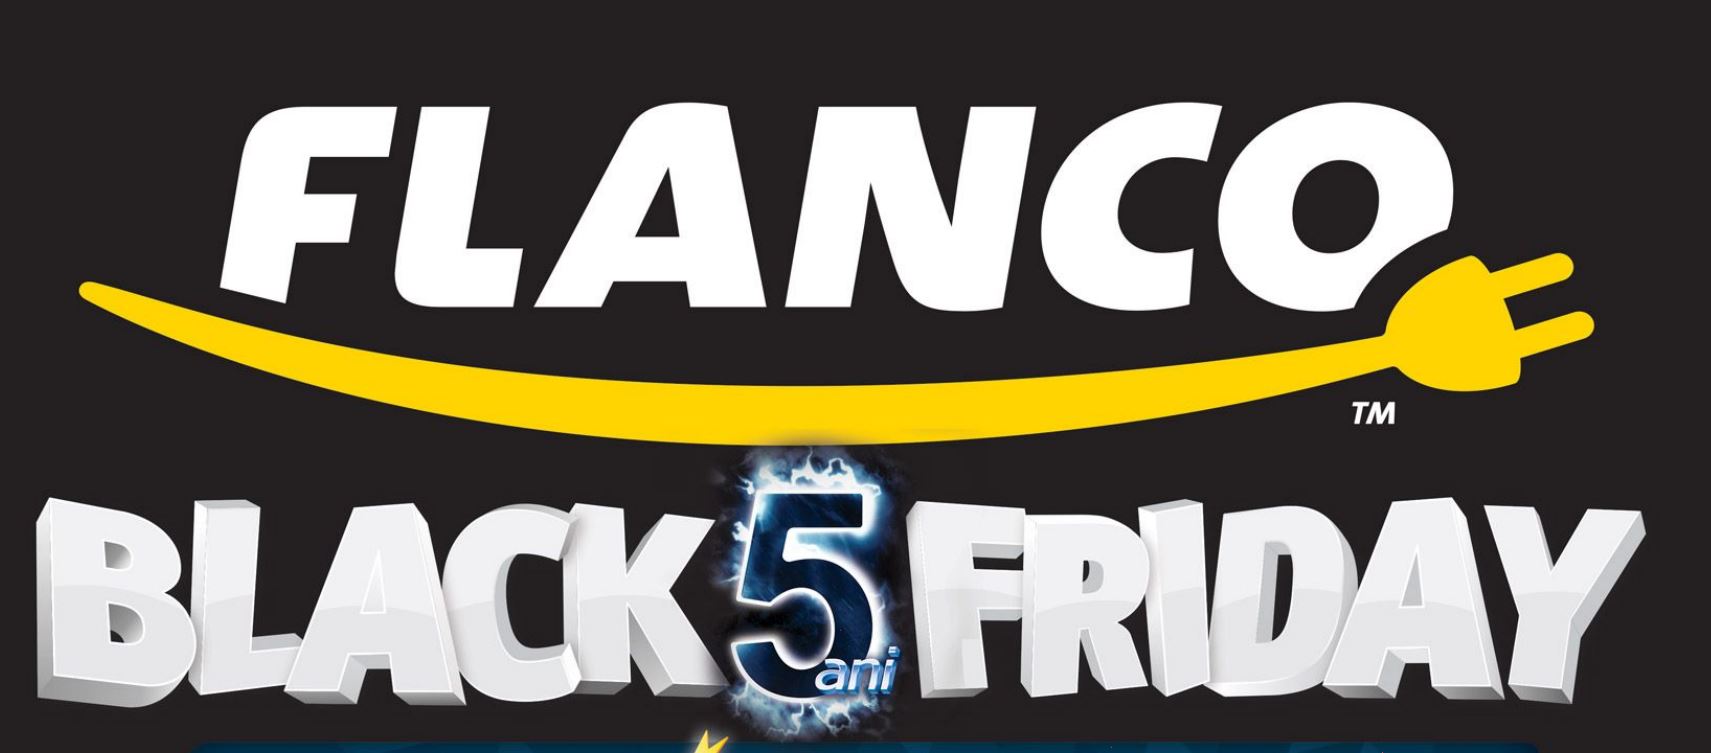 Catálogo de descuentos Flanco Black Friday 2015